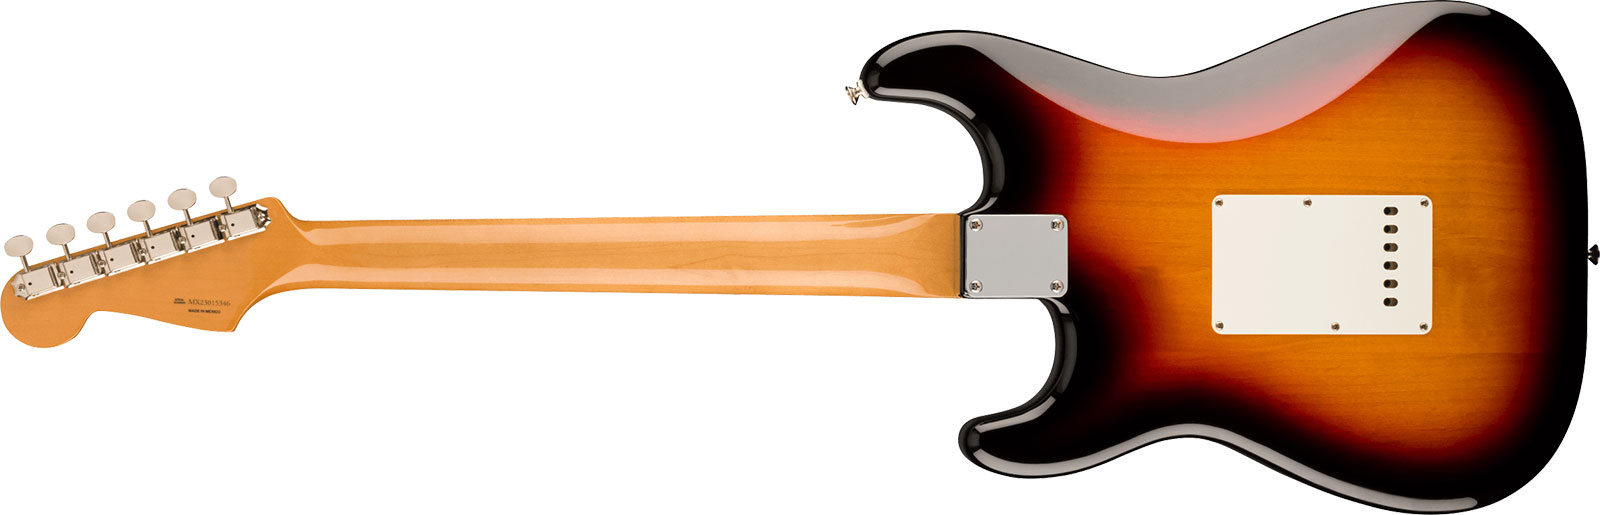 Fender Strat 60s Vintera 2 Mex 3s Trem Rw - 3-color Sunburst - Guitarra eléctrica con forma de str. - Variation 1